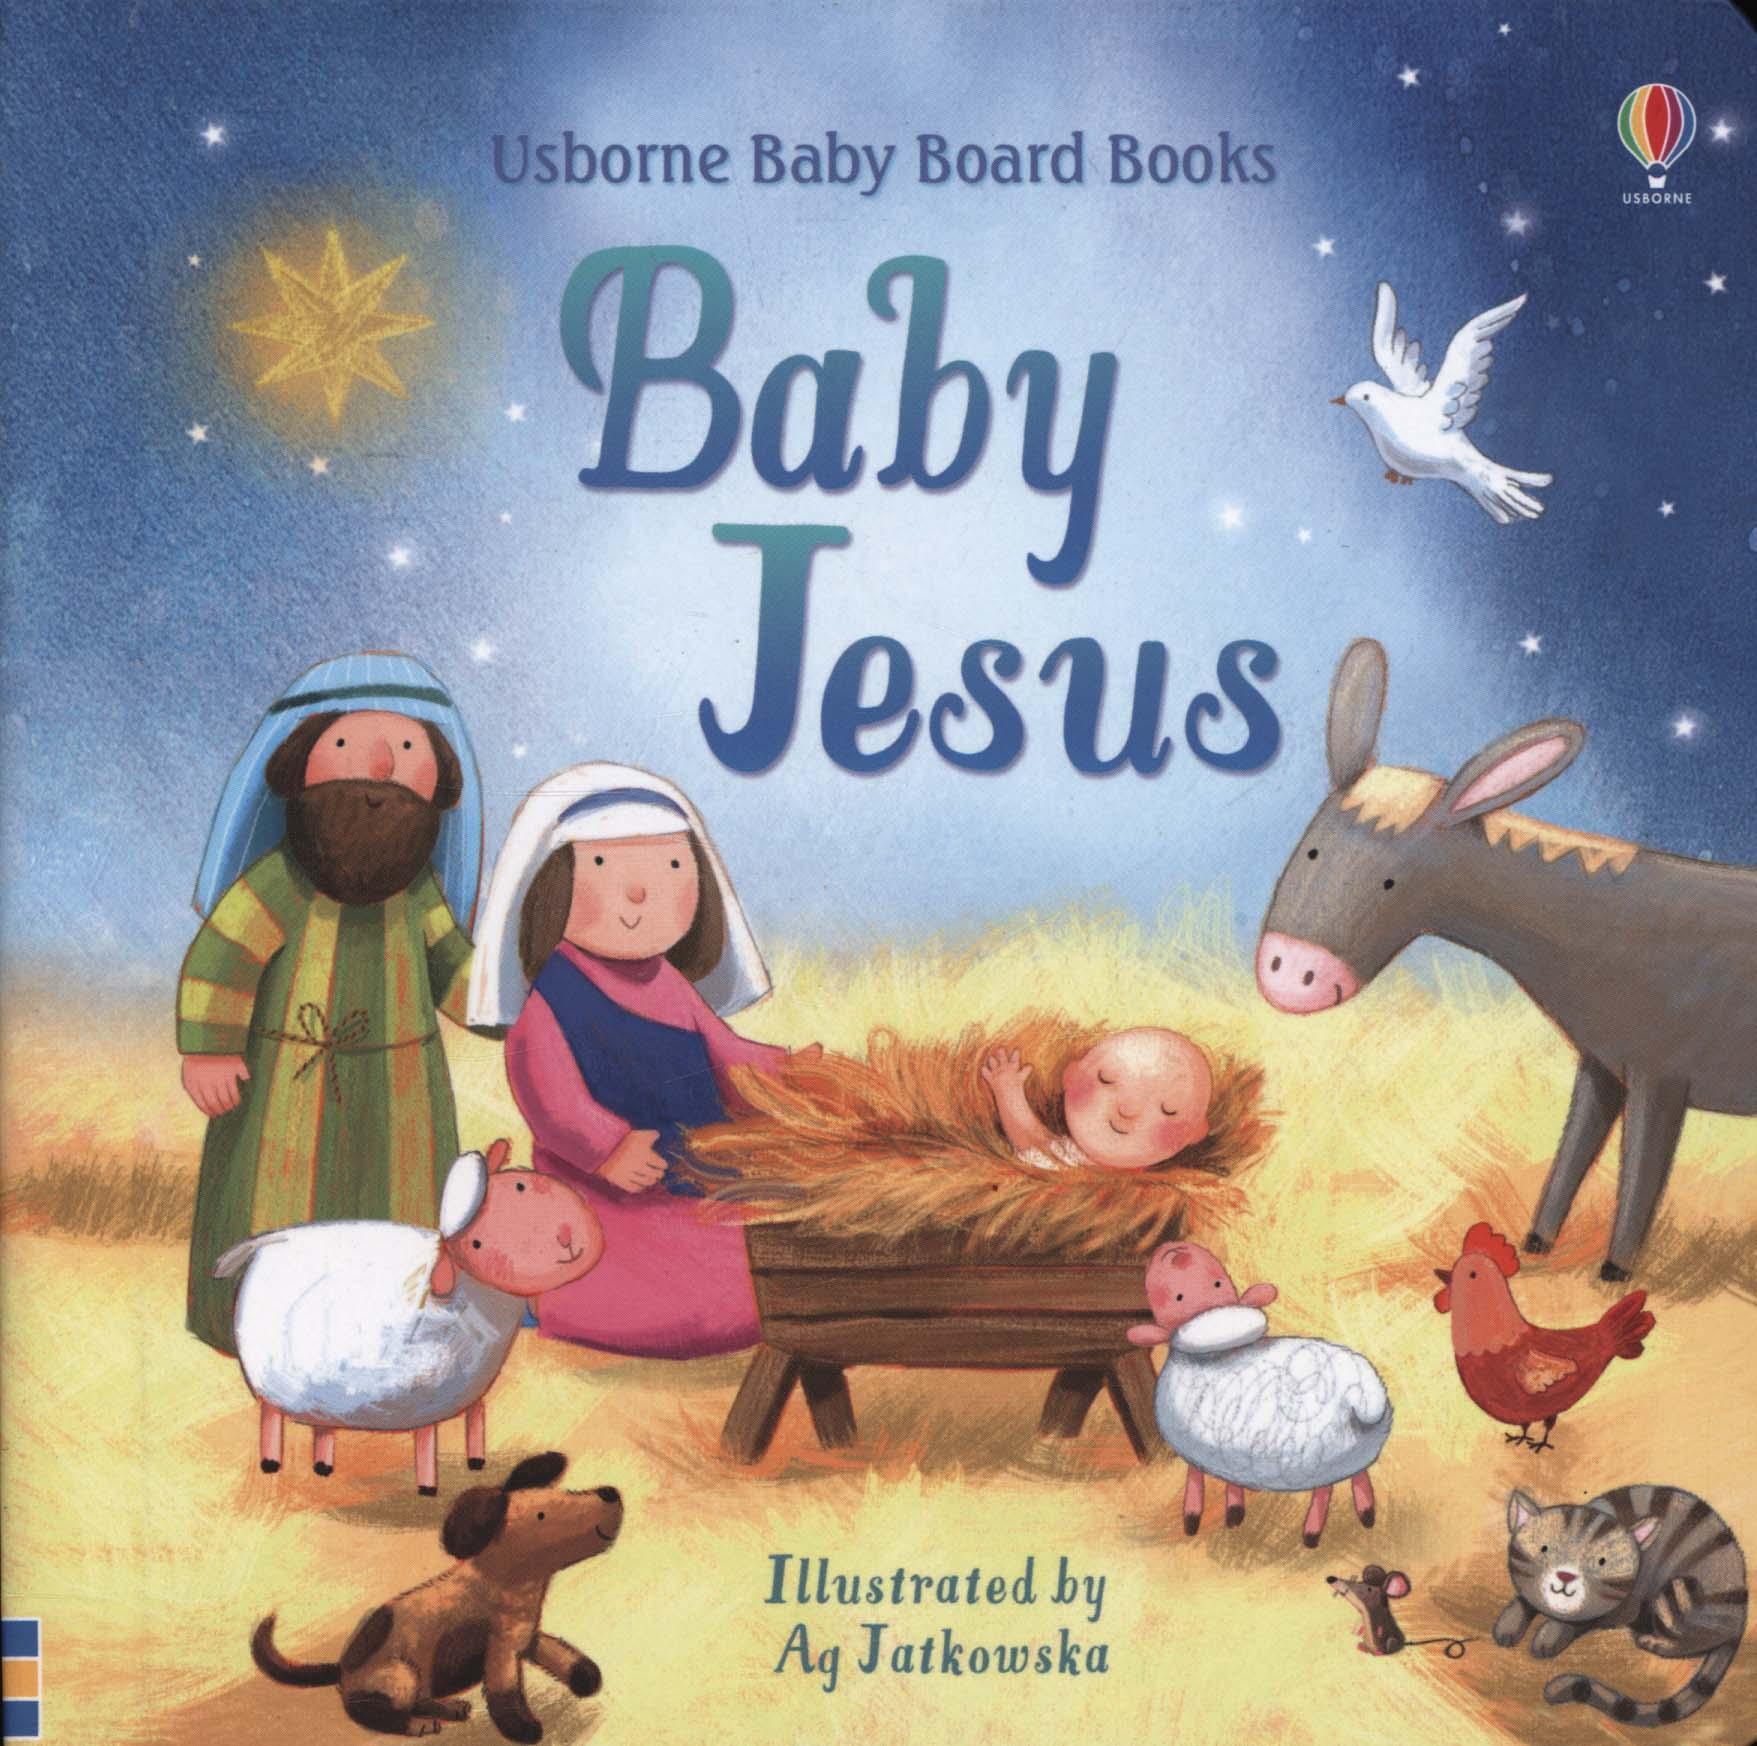 Baby Jesus - Lesley Sims